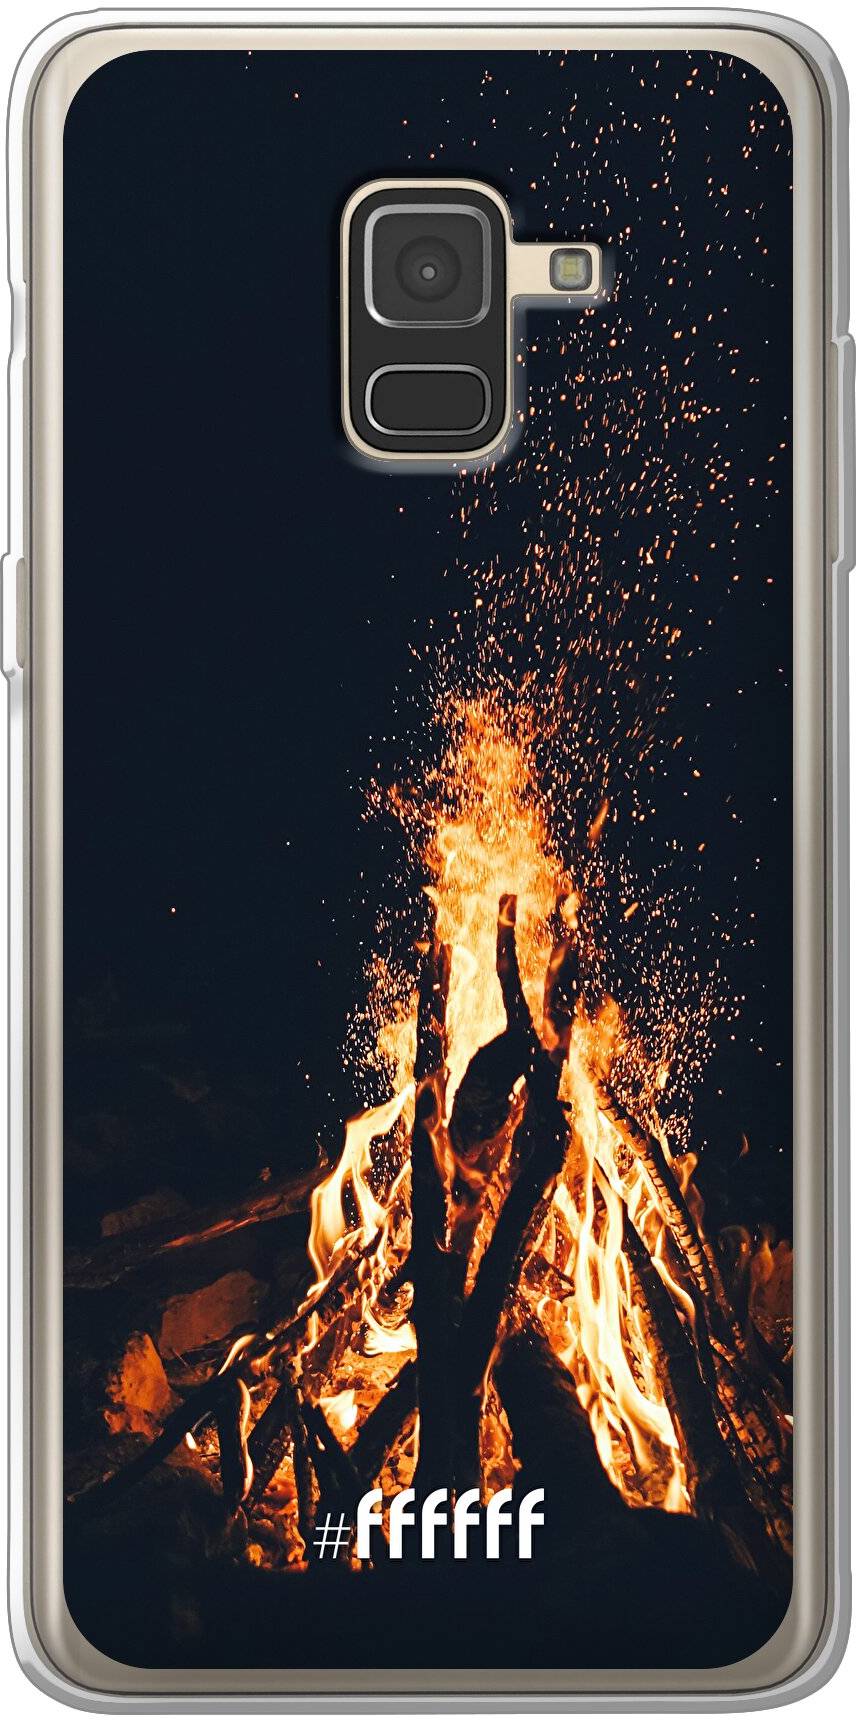 Bonfire Galaxy A8 (2018)